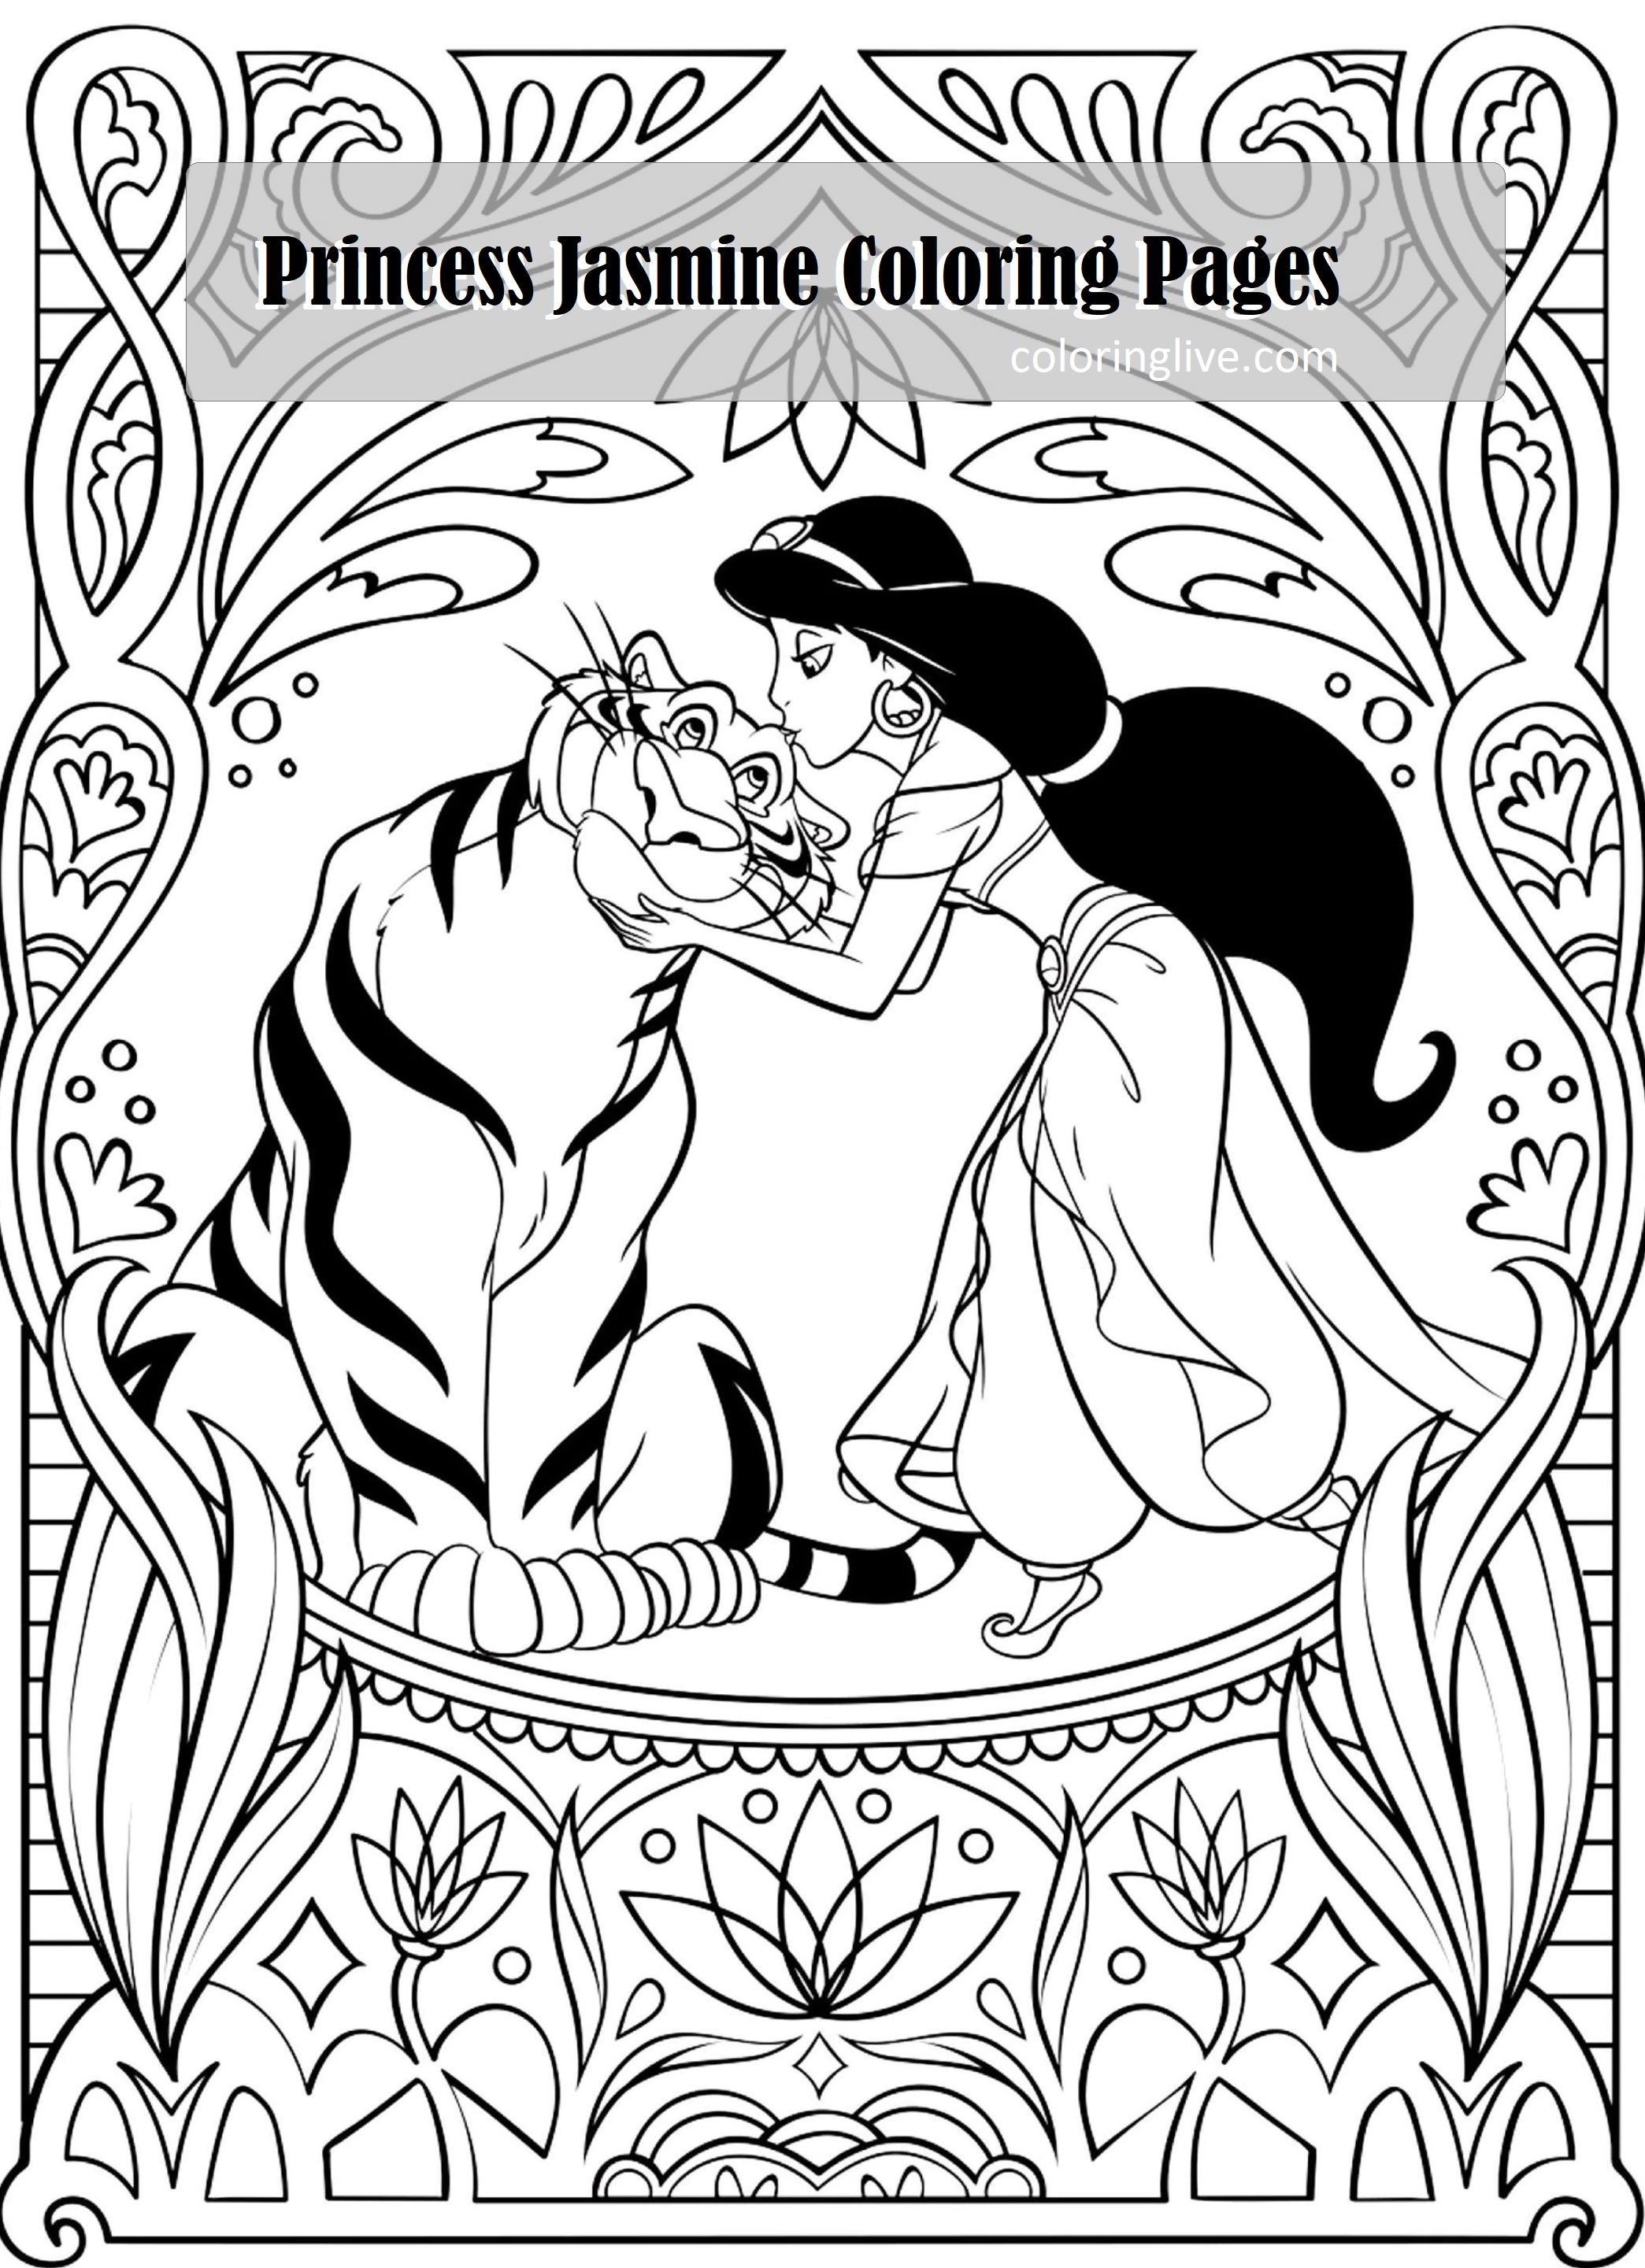 Princess Jasmine and Rajah the Tiger coloring page - SheetalColor.com